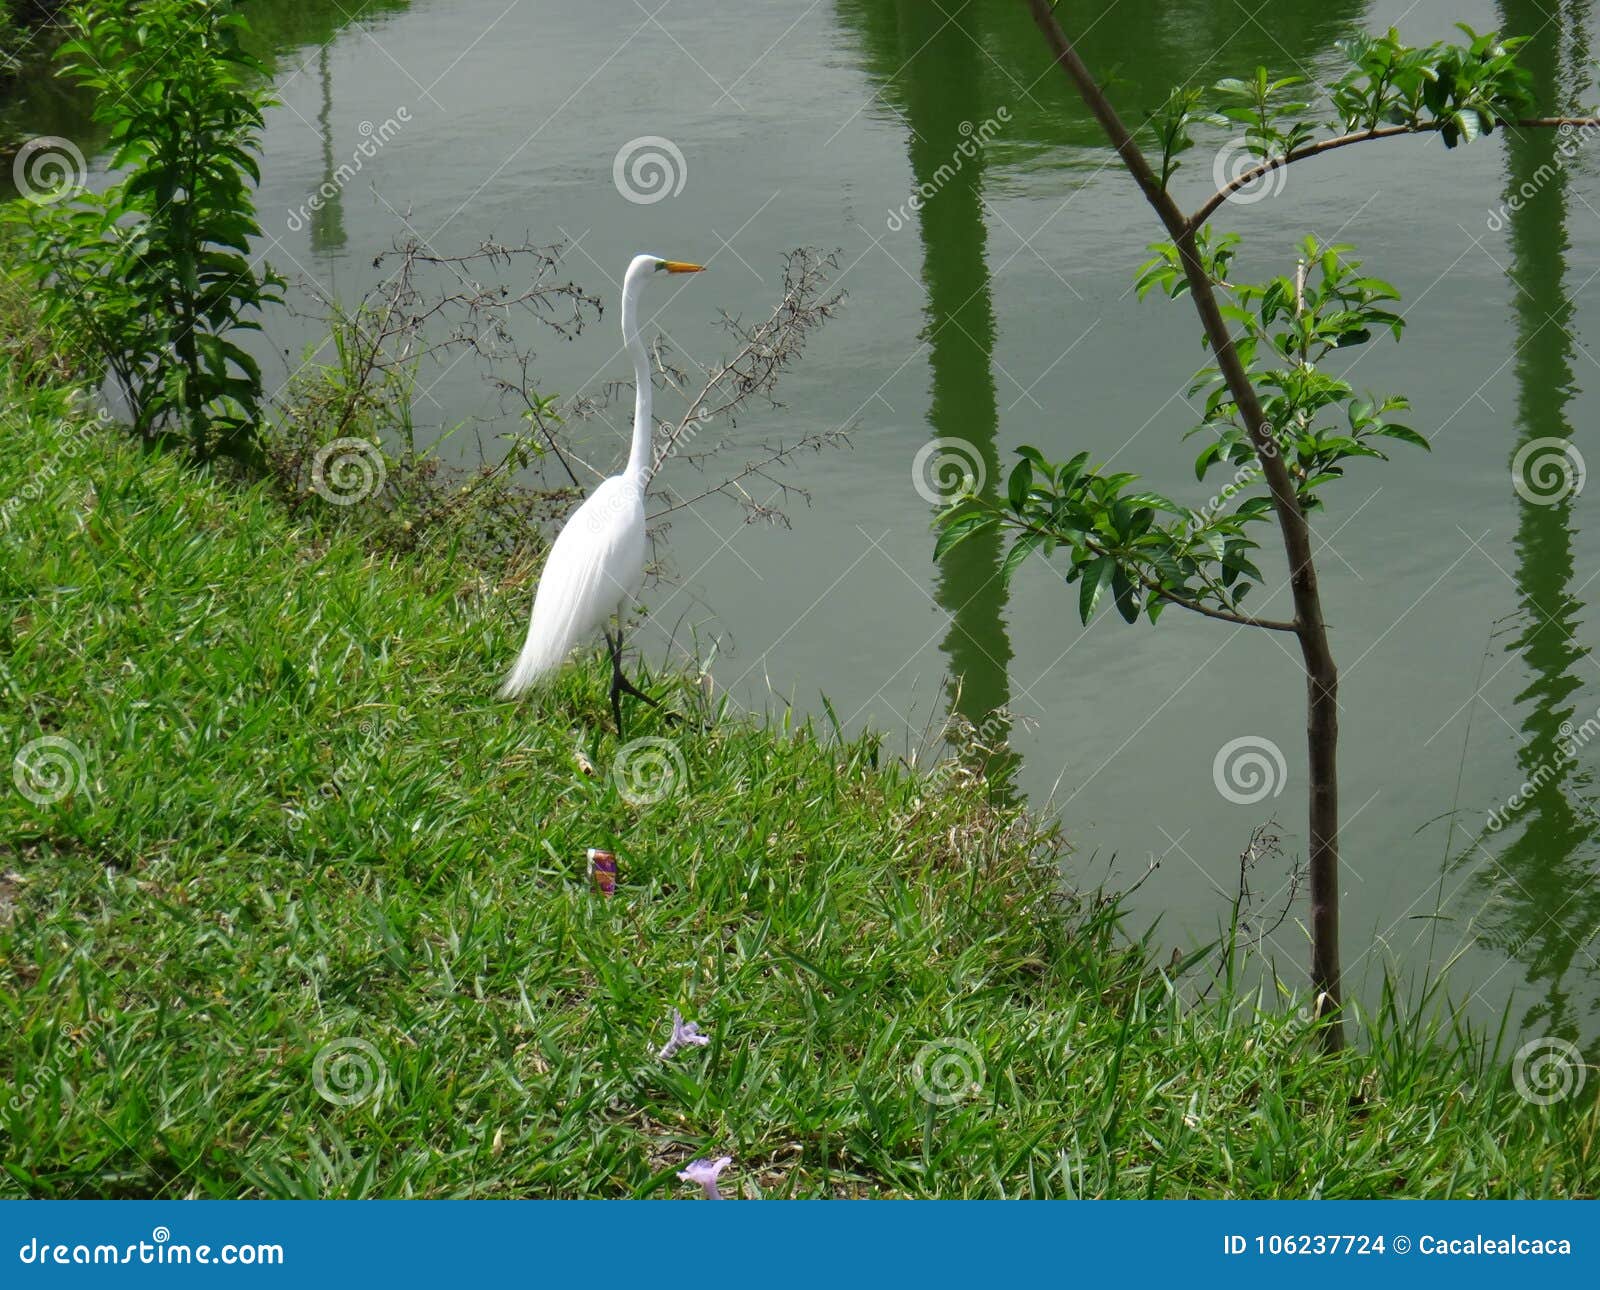 white heron on the lake shore